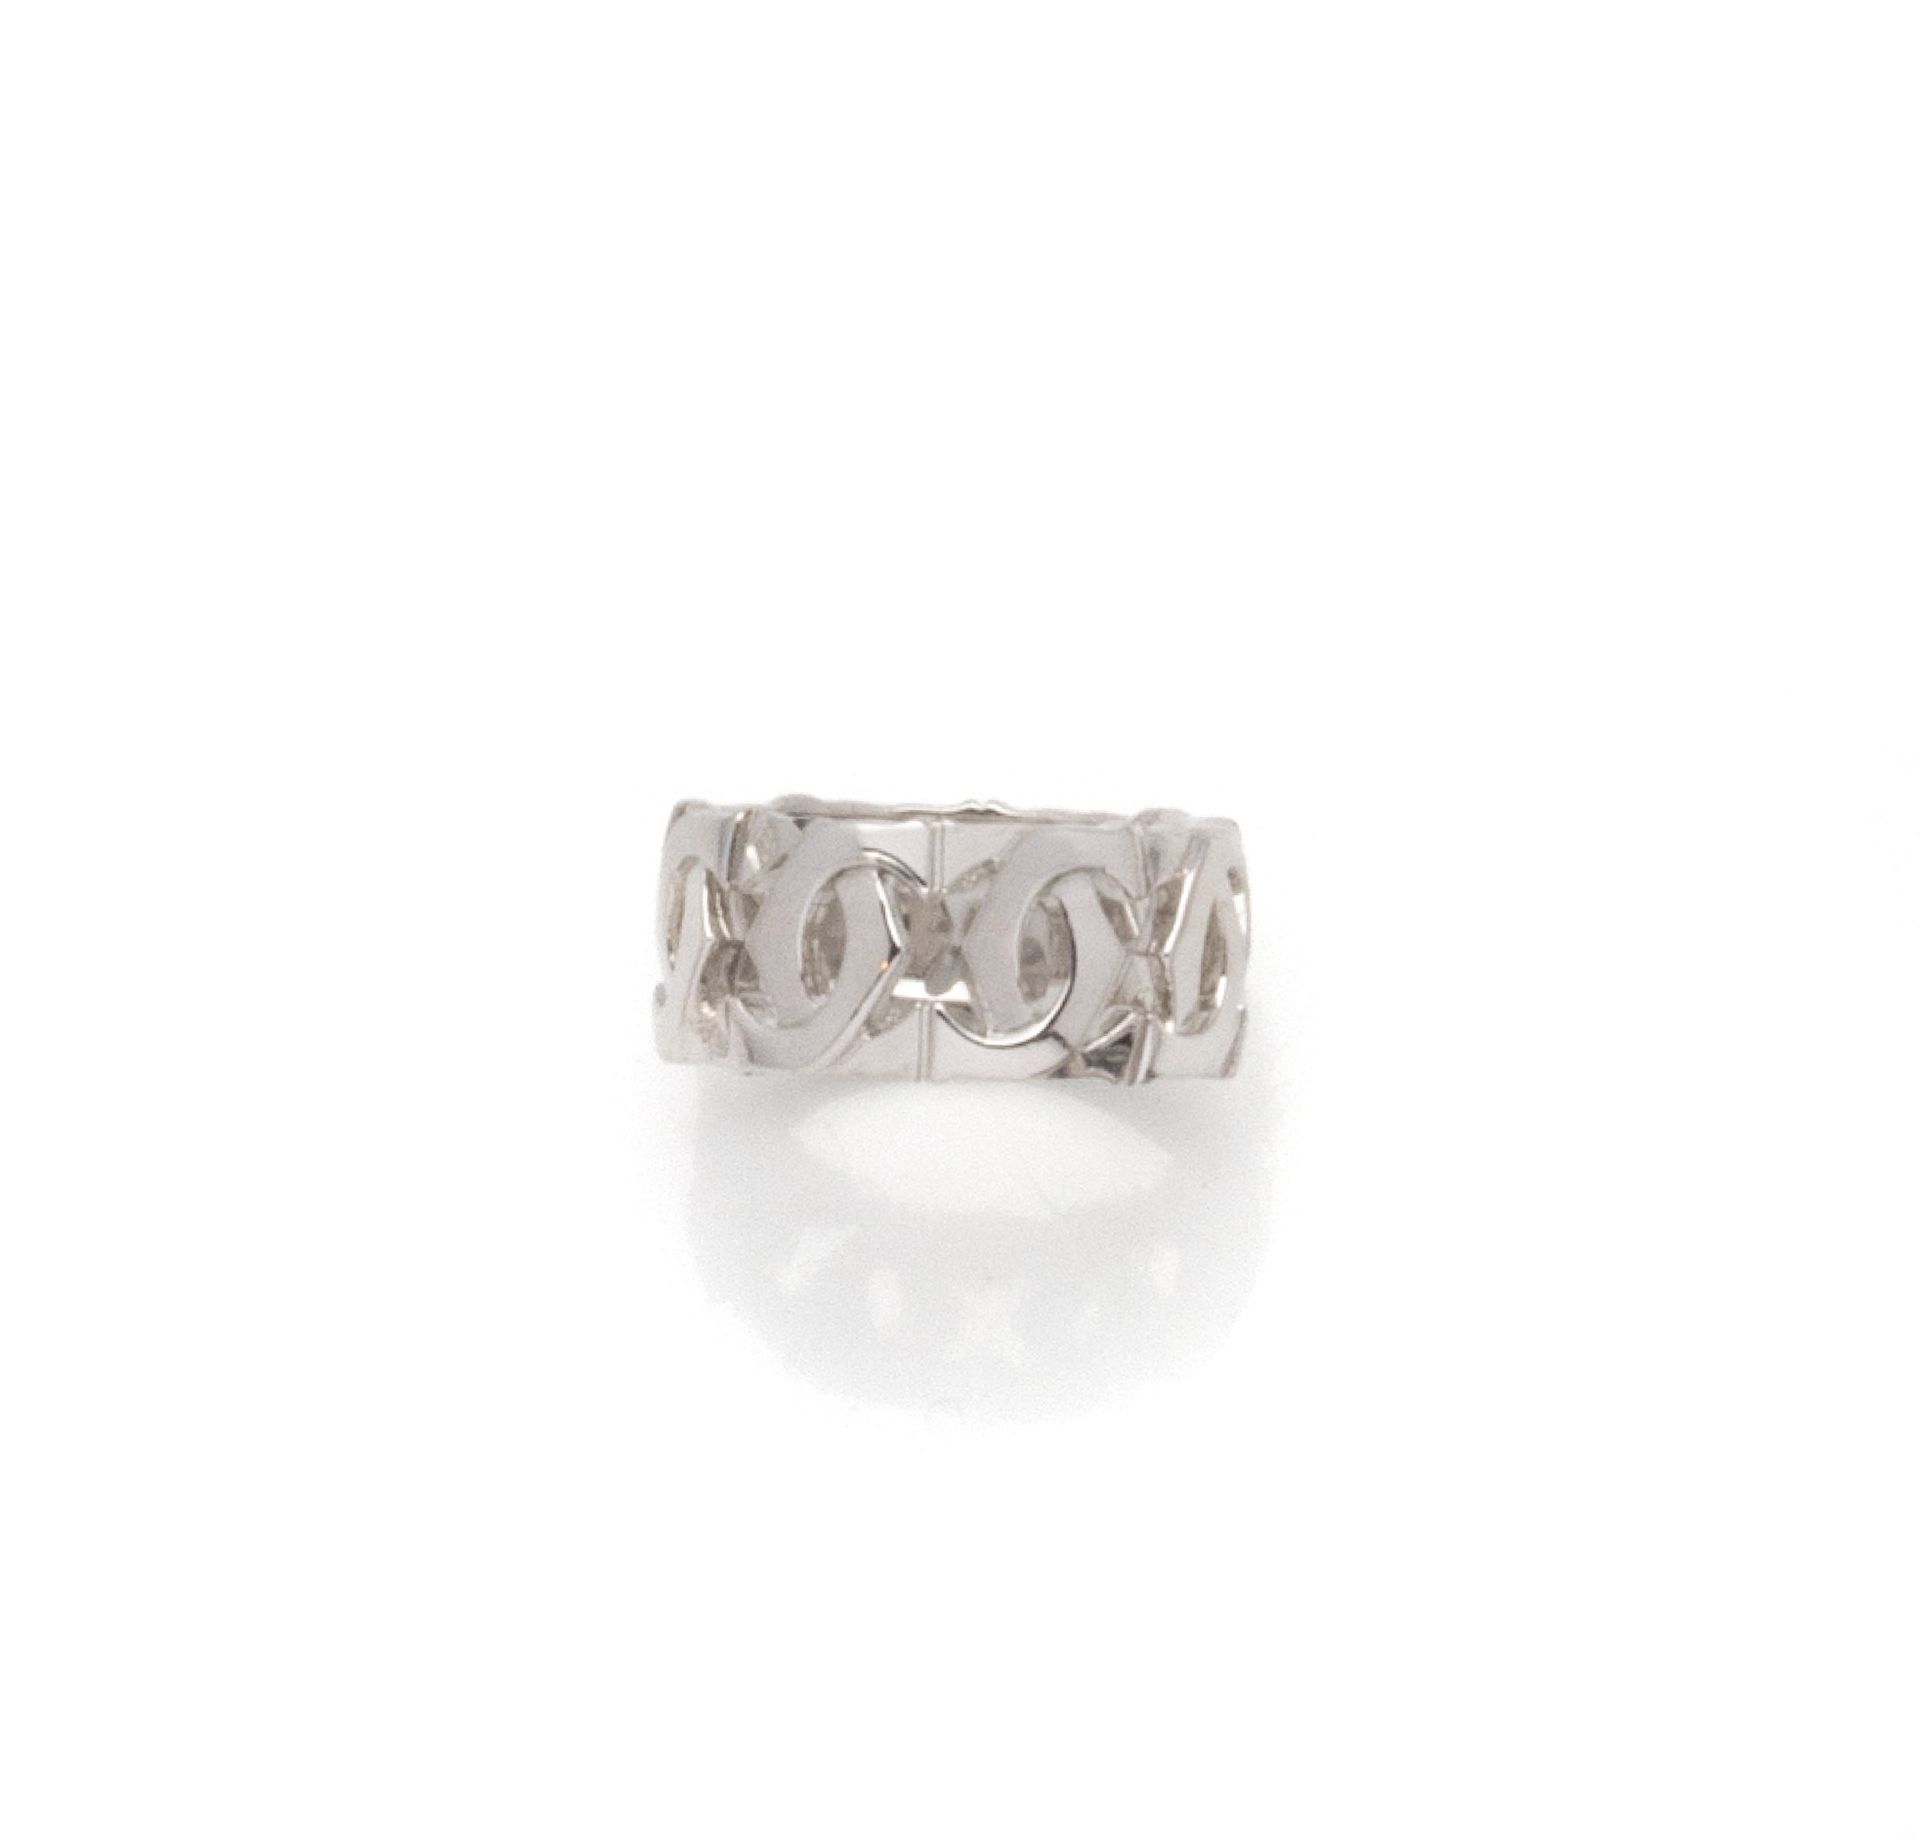 Null 卡地亚

18K(750/1000)白金结婚戒指，交错 "C "型设计。

编号为736487

签有卡地亚和珠宝商Jean Brun的大师印章，20&hellip;